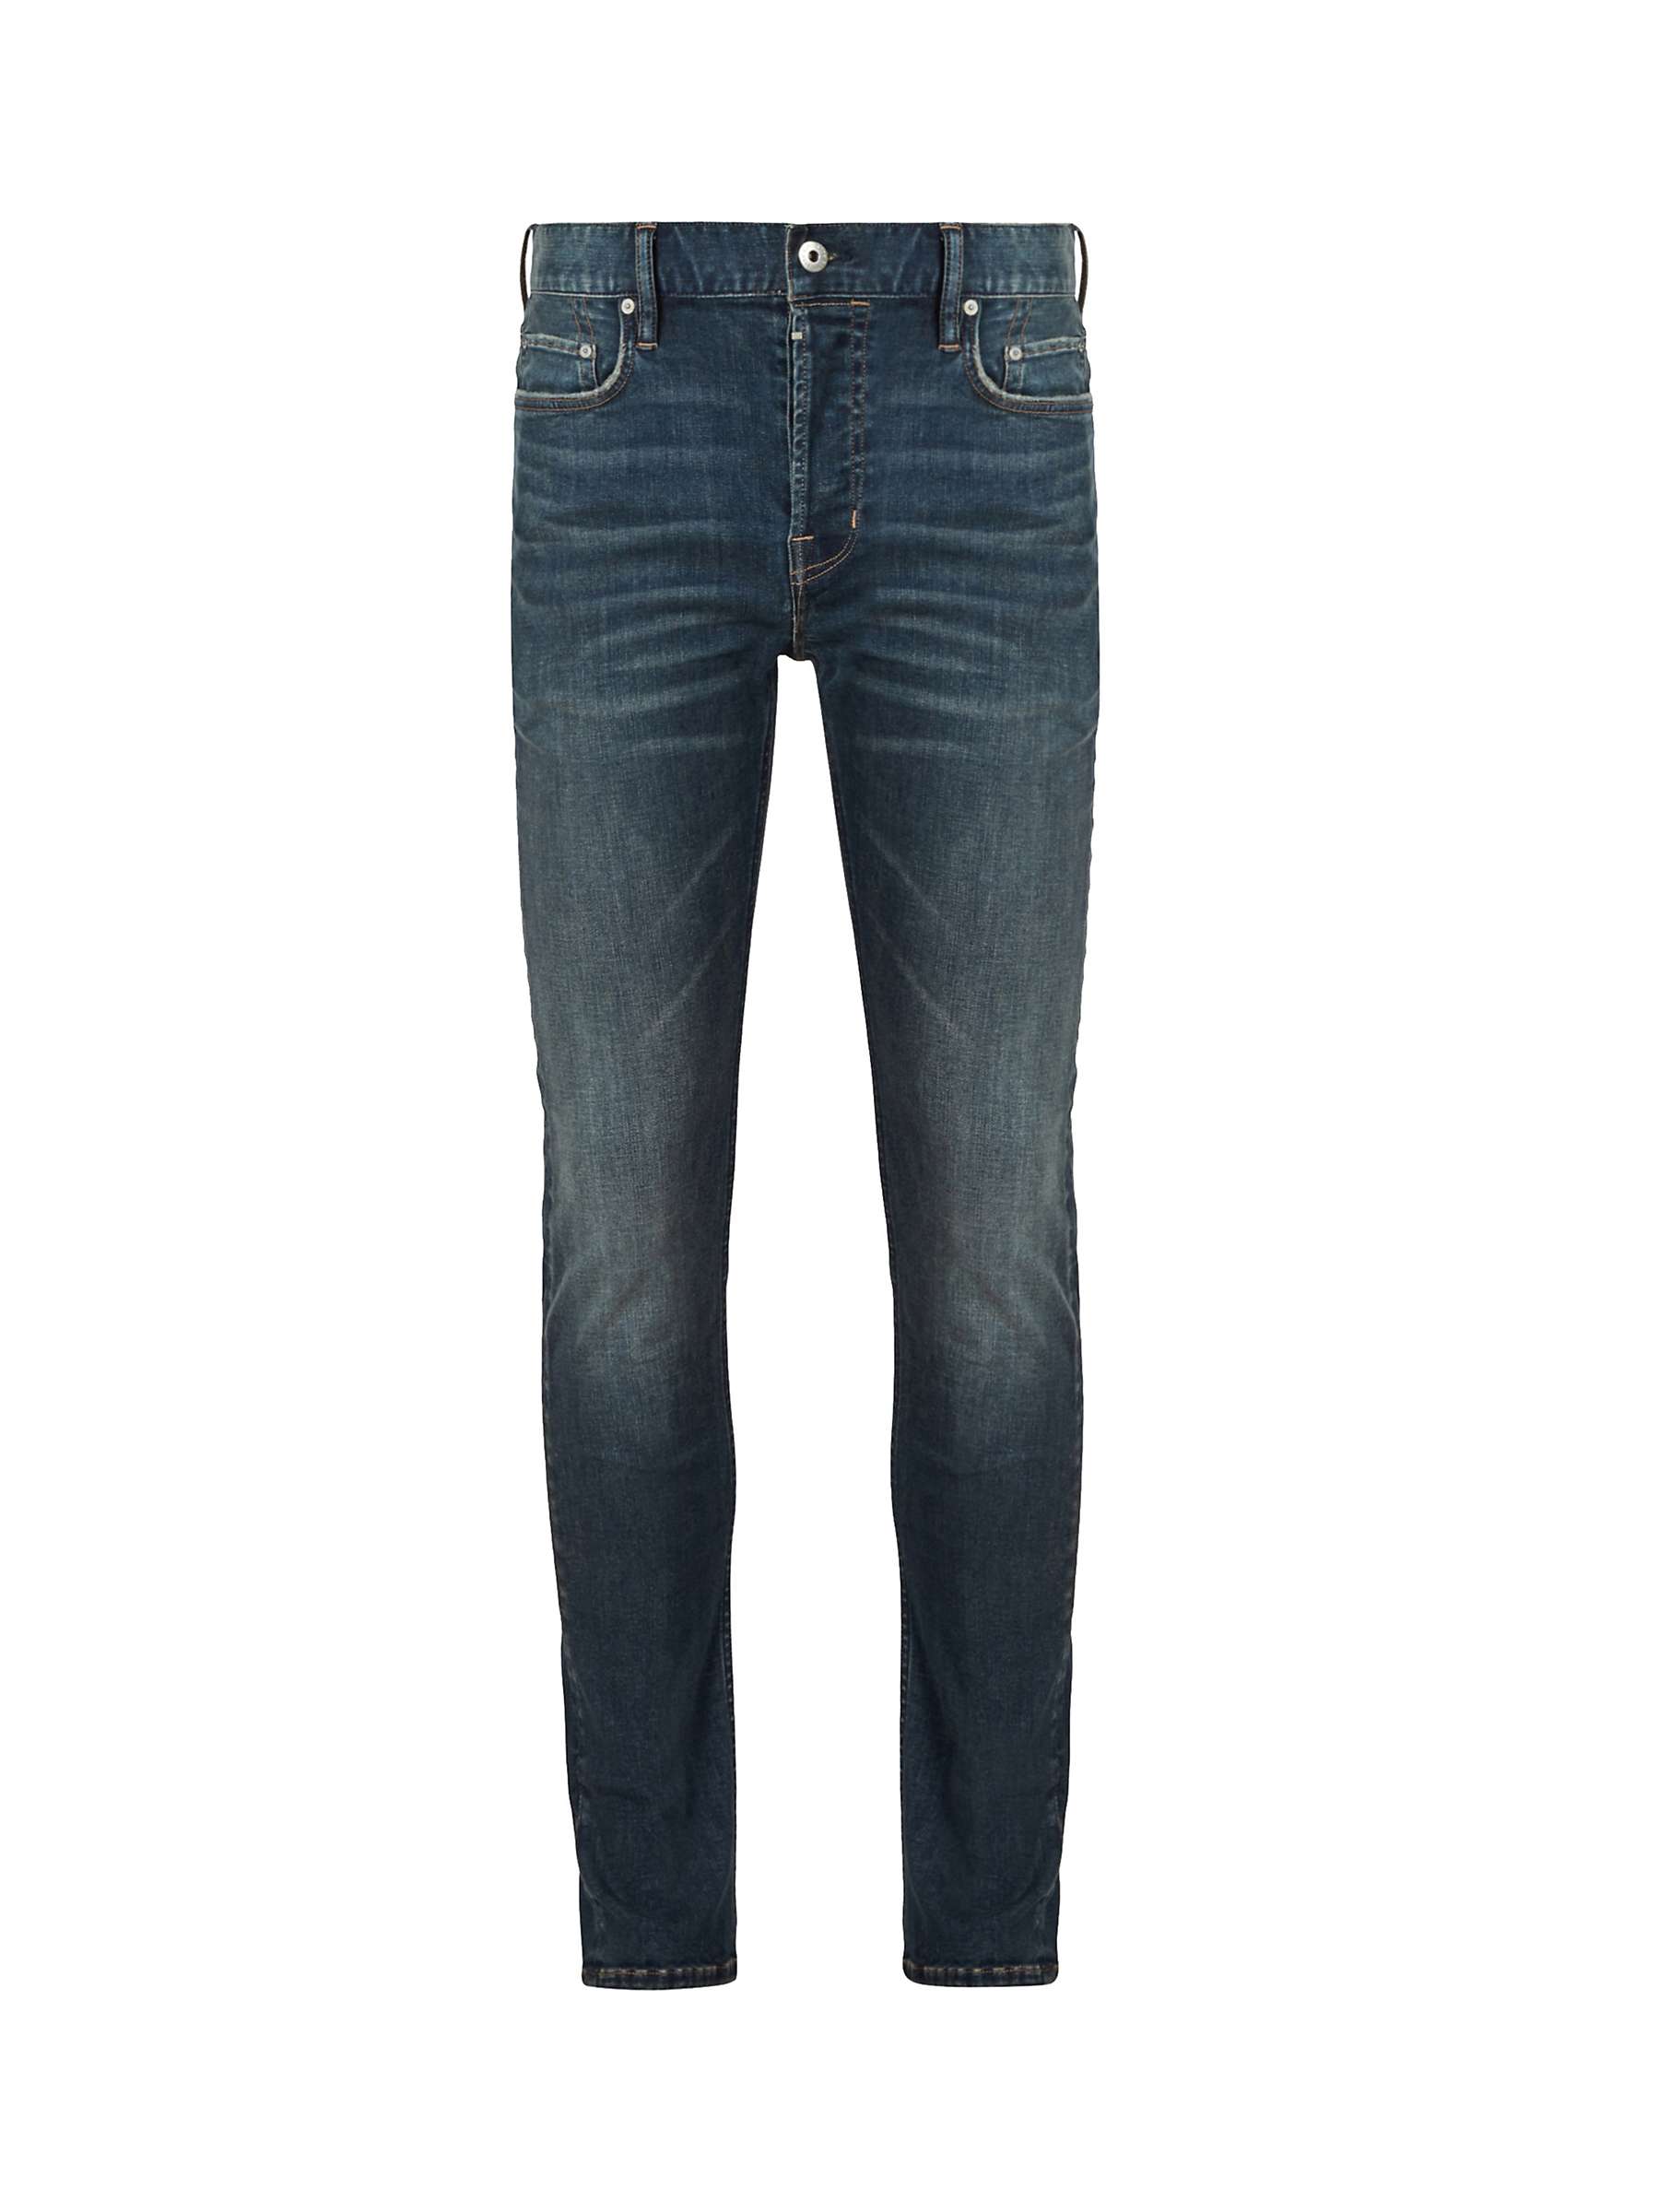 AllSaints Ronnie Skinny Jeans, Indigo at John Lewis & Partners